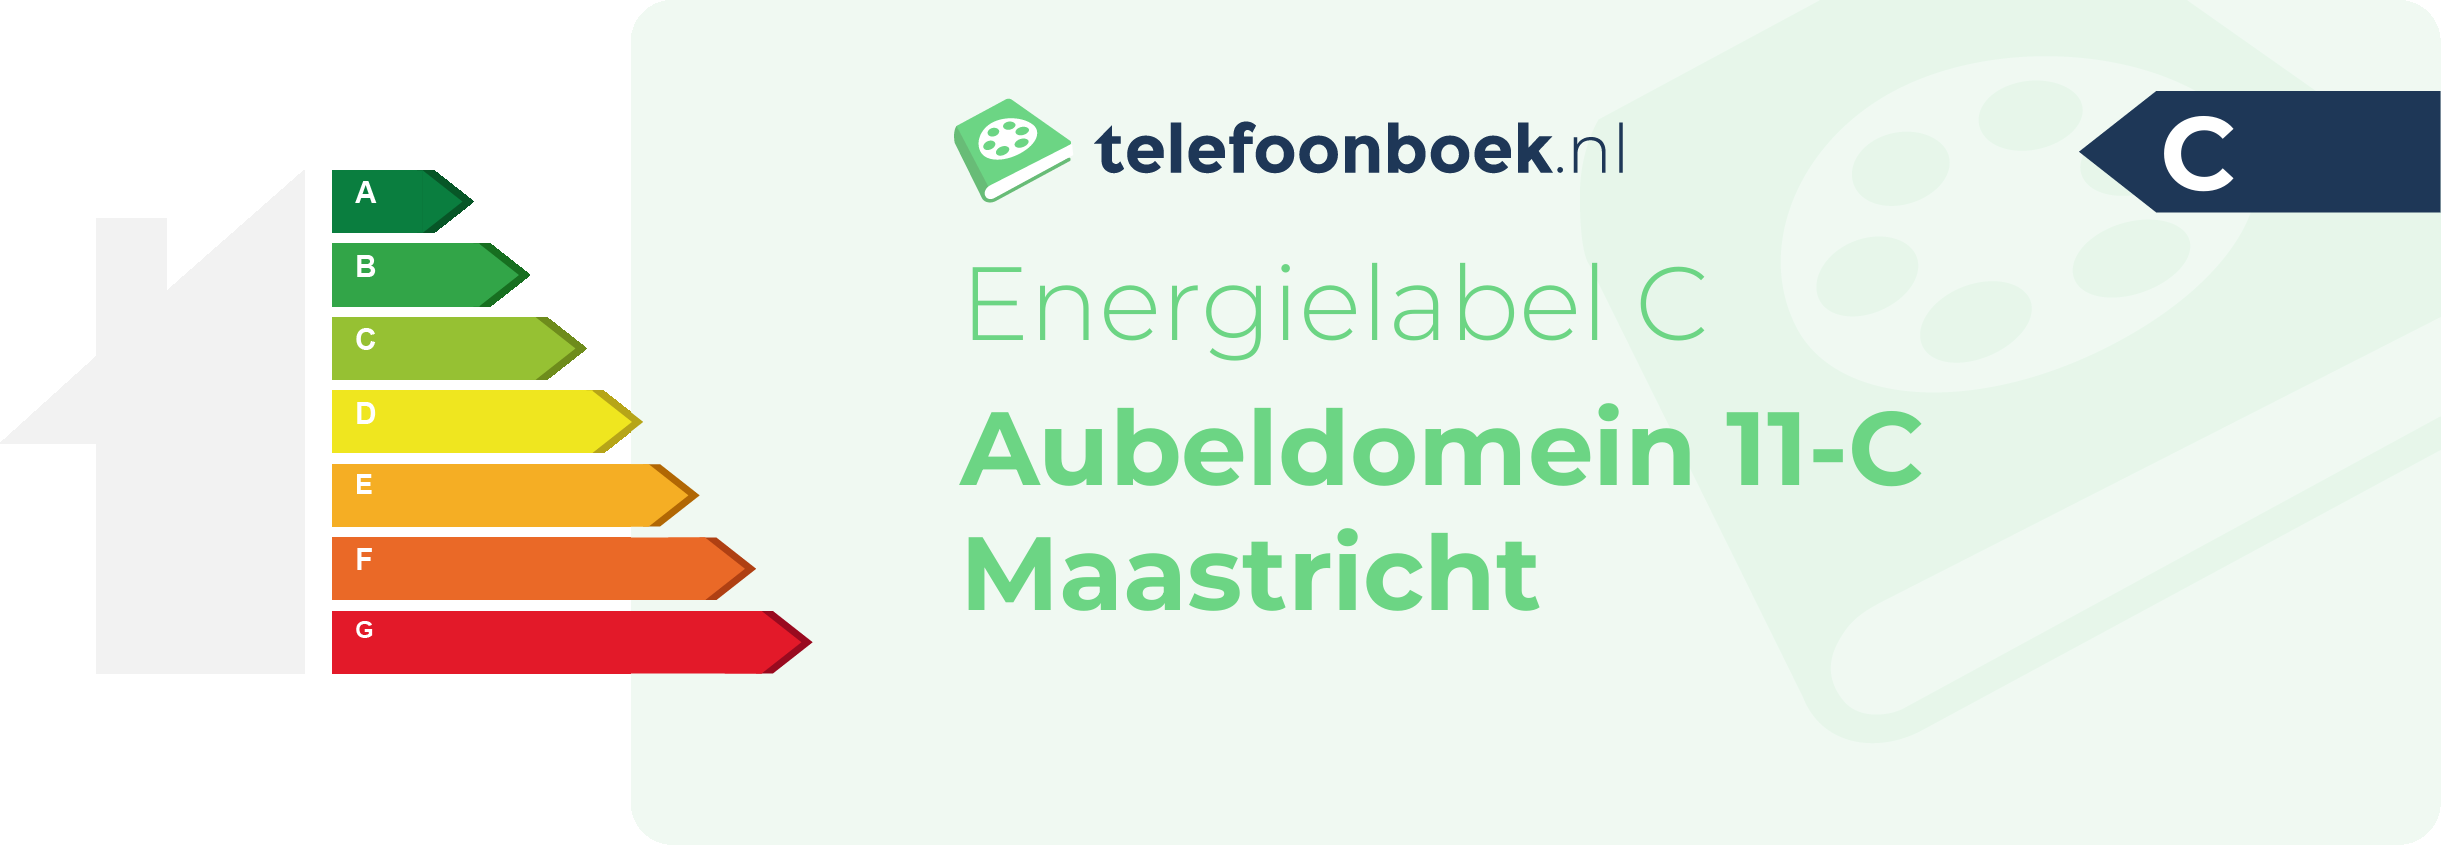 Energielabel Aubeldomein 11-C Maastricht